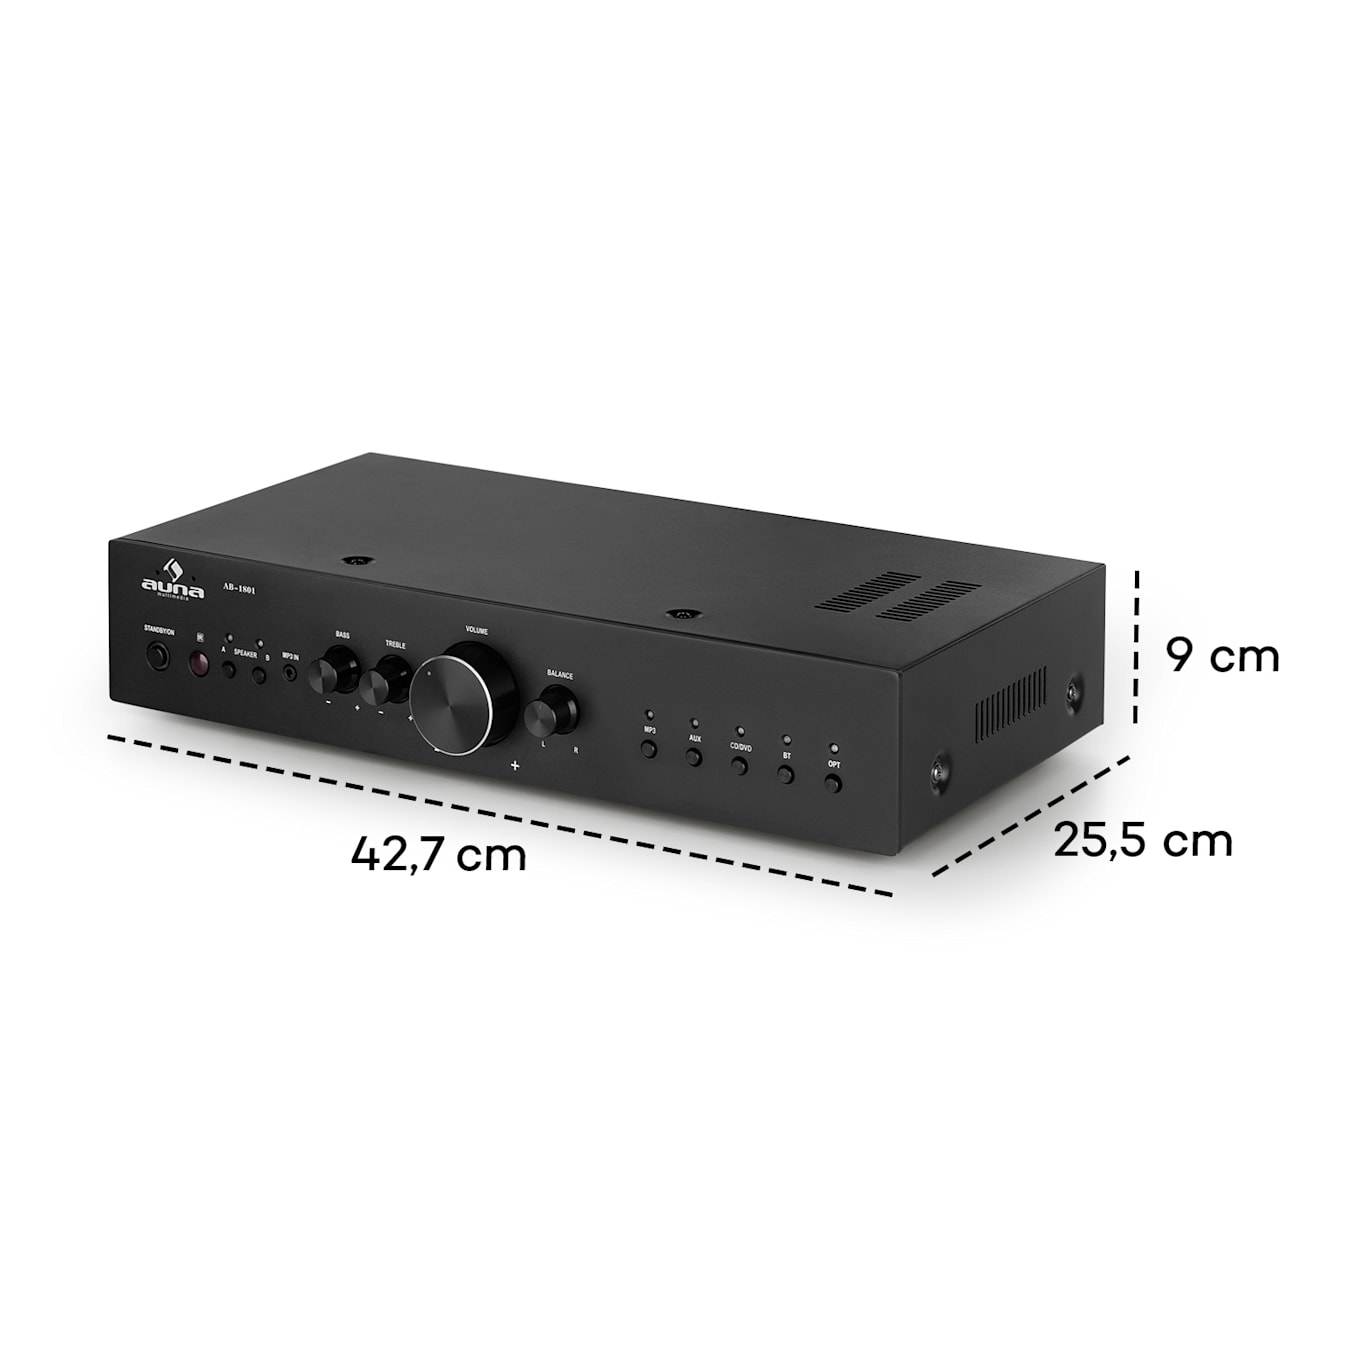 Review] Auna AV 2 CD508 - integrated amplifier - [English]